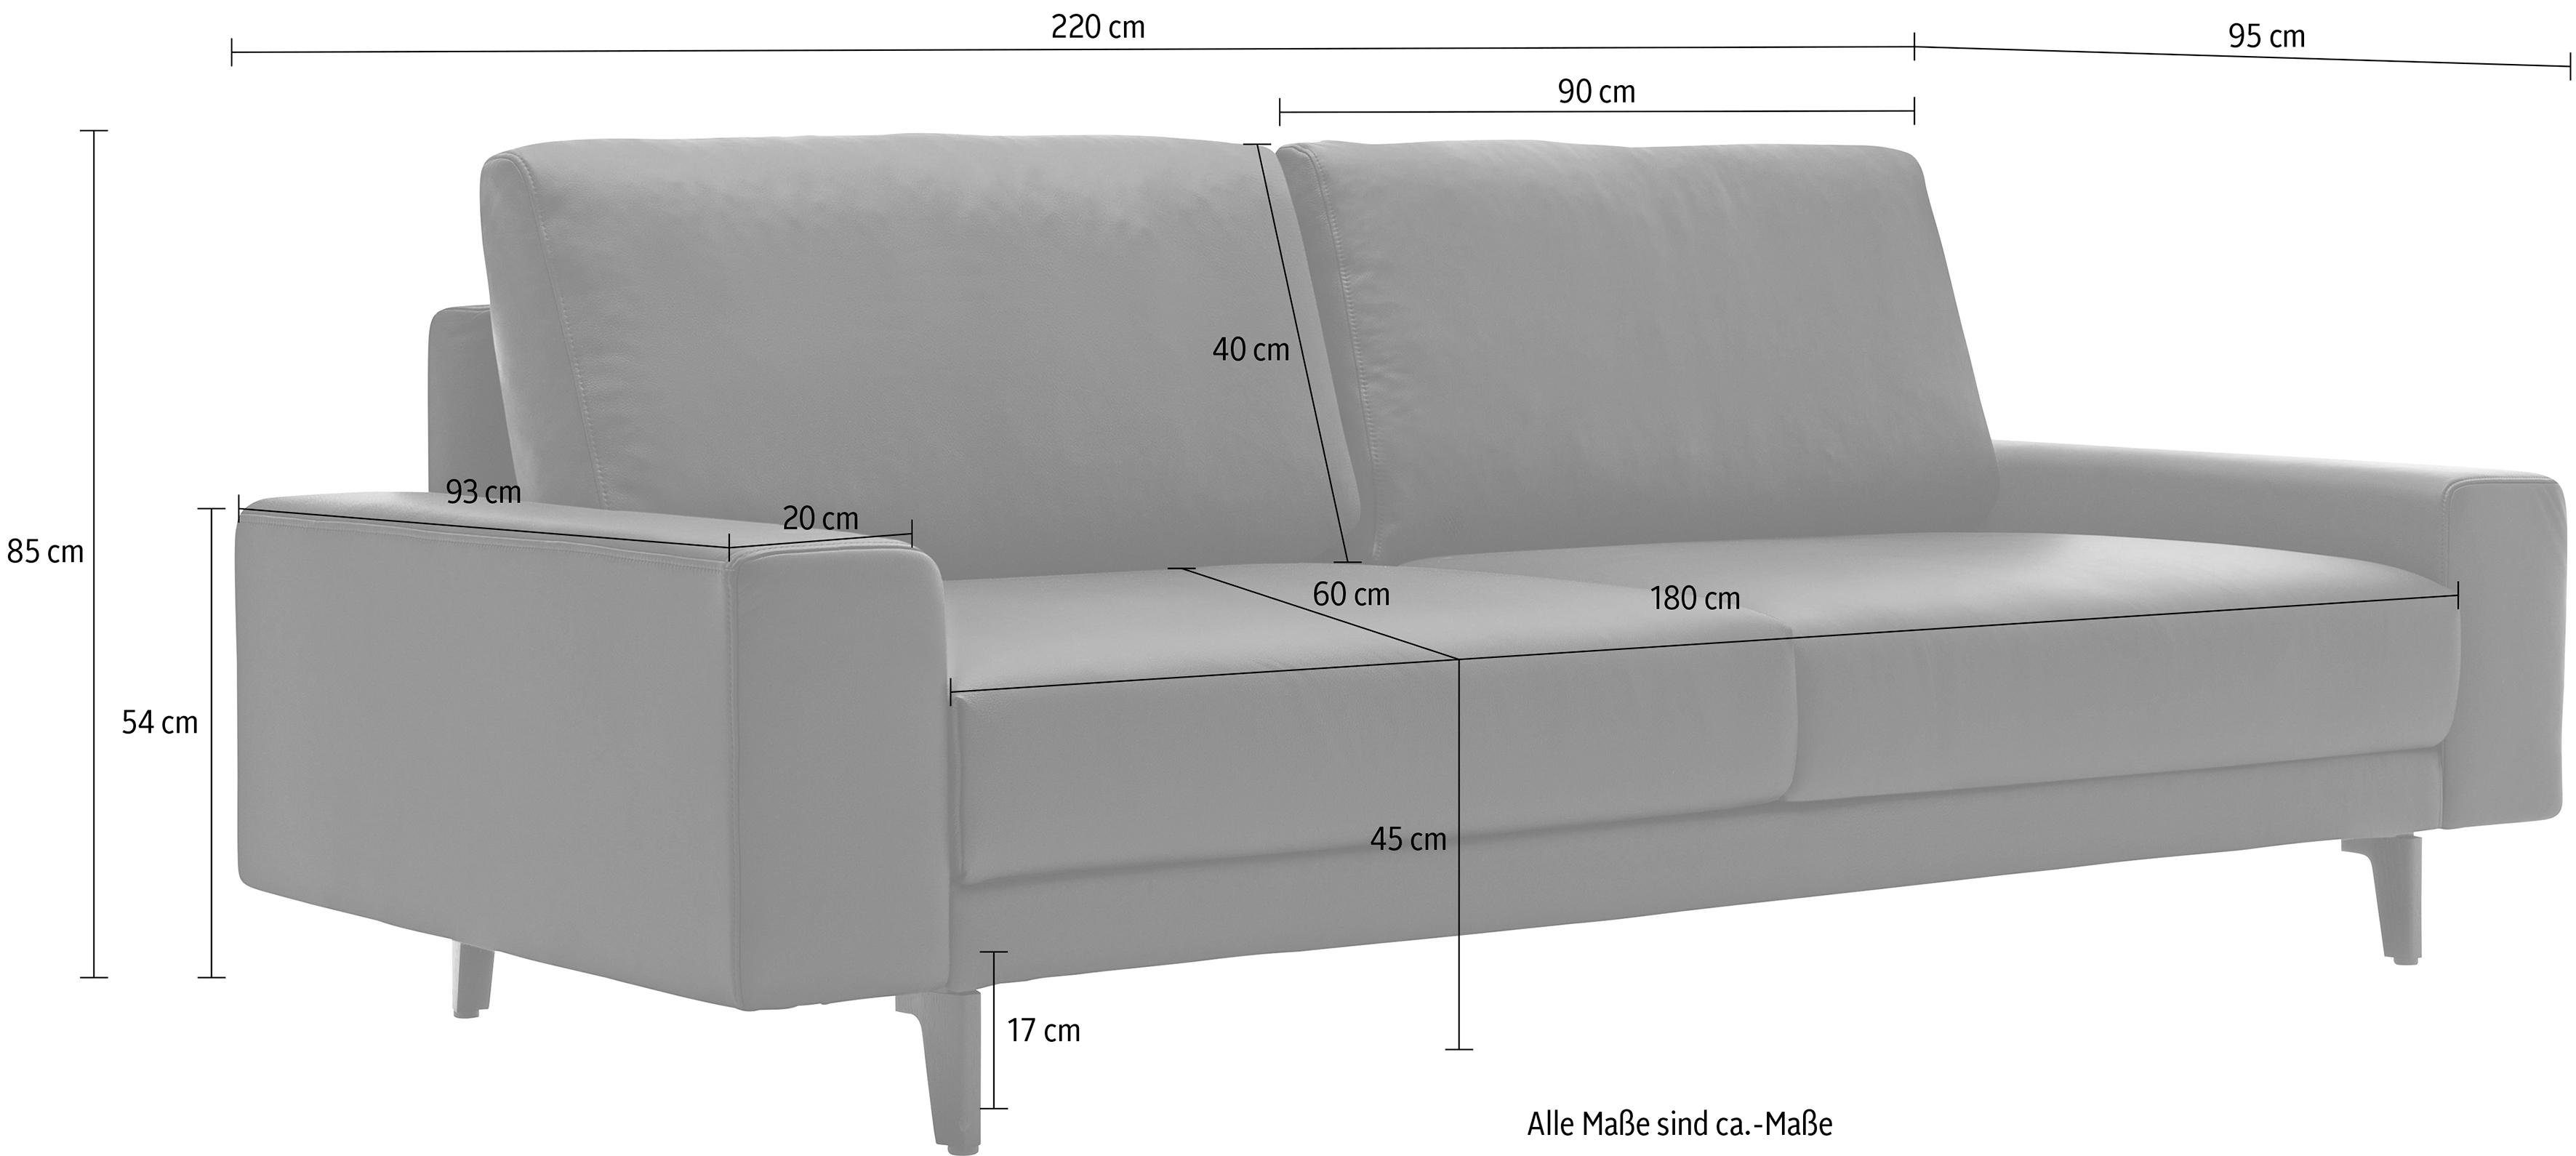 hülsta sofa Armlehne in Breite 220 umbragrau, Alugussfüße hs.450, 3-Sitzer breit cm niedrig,